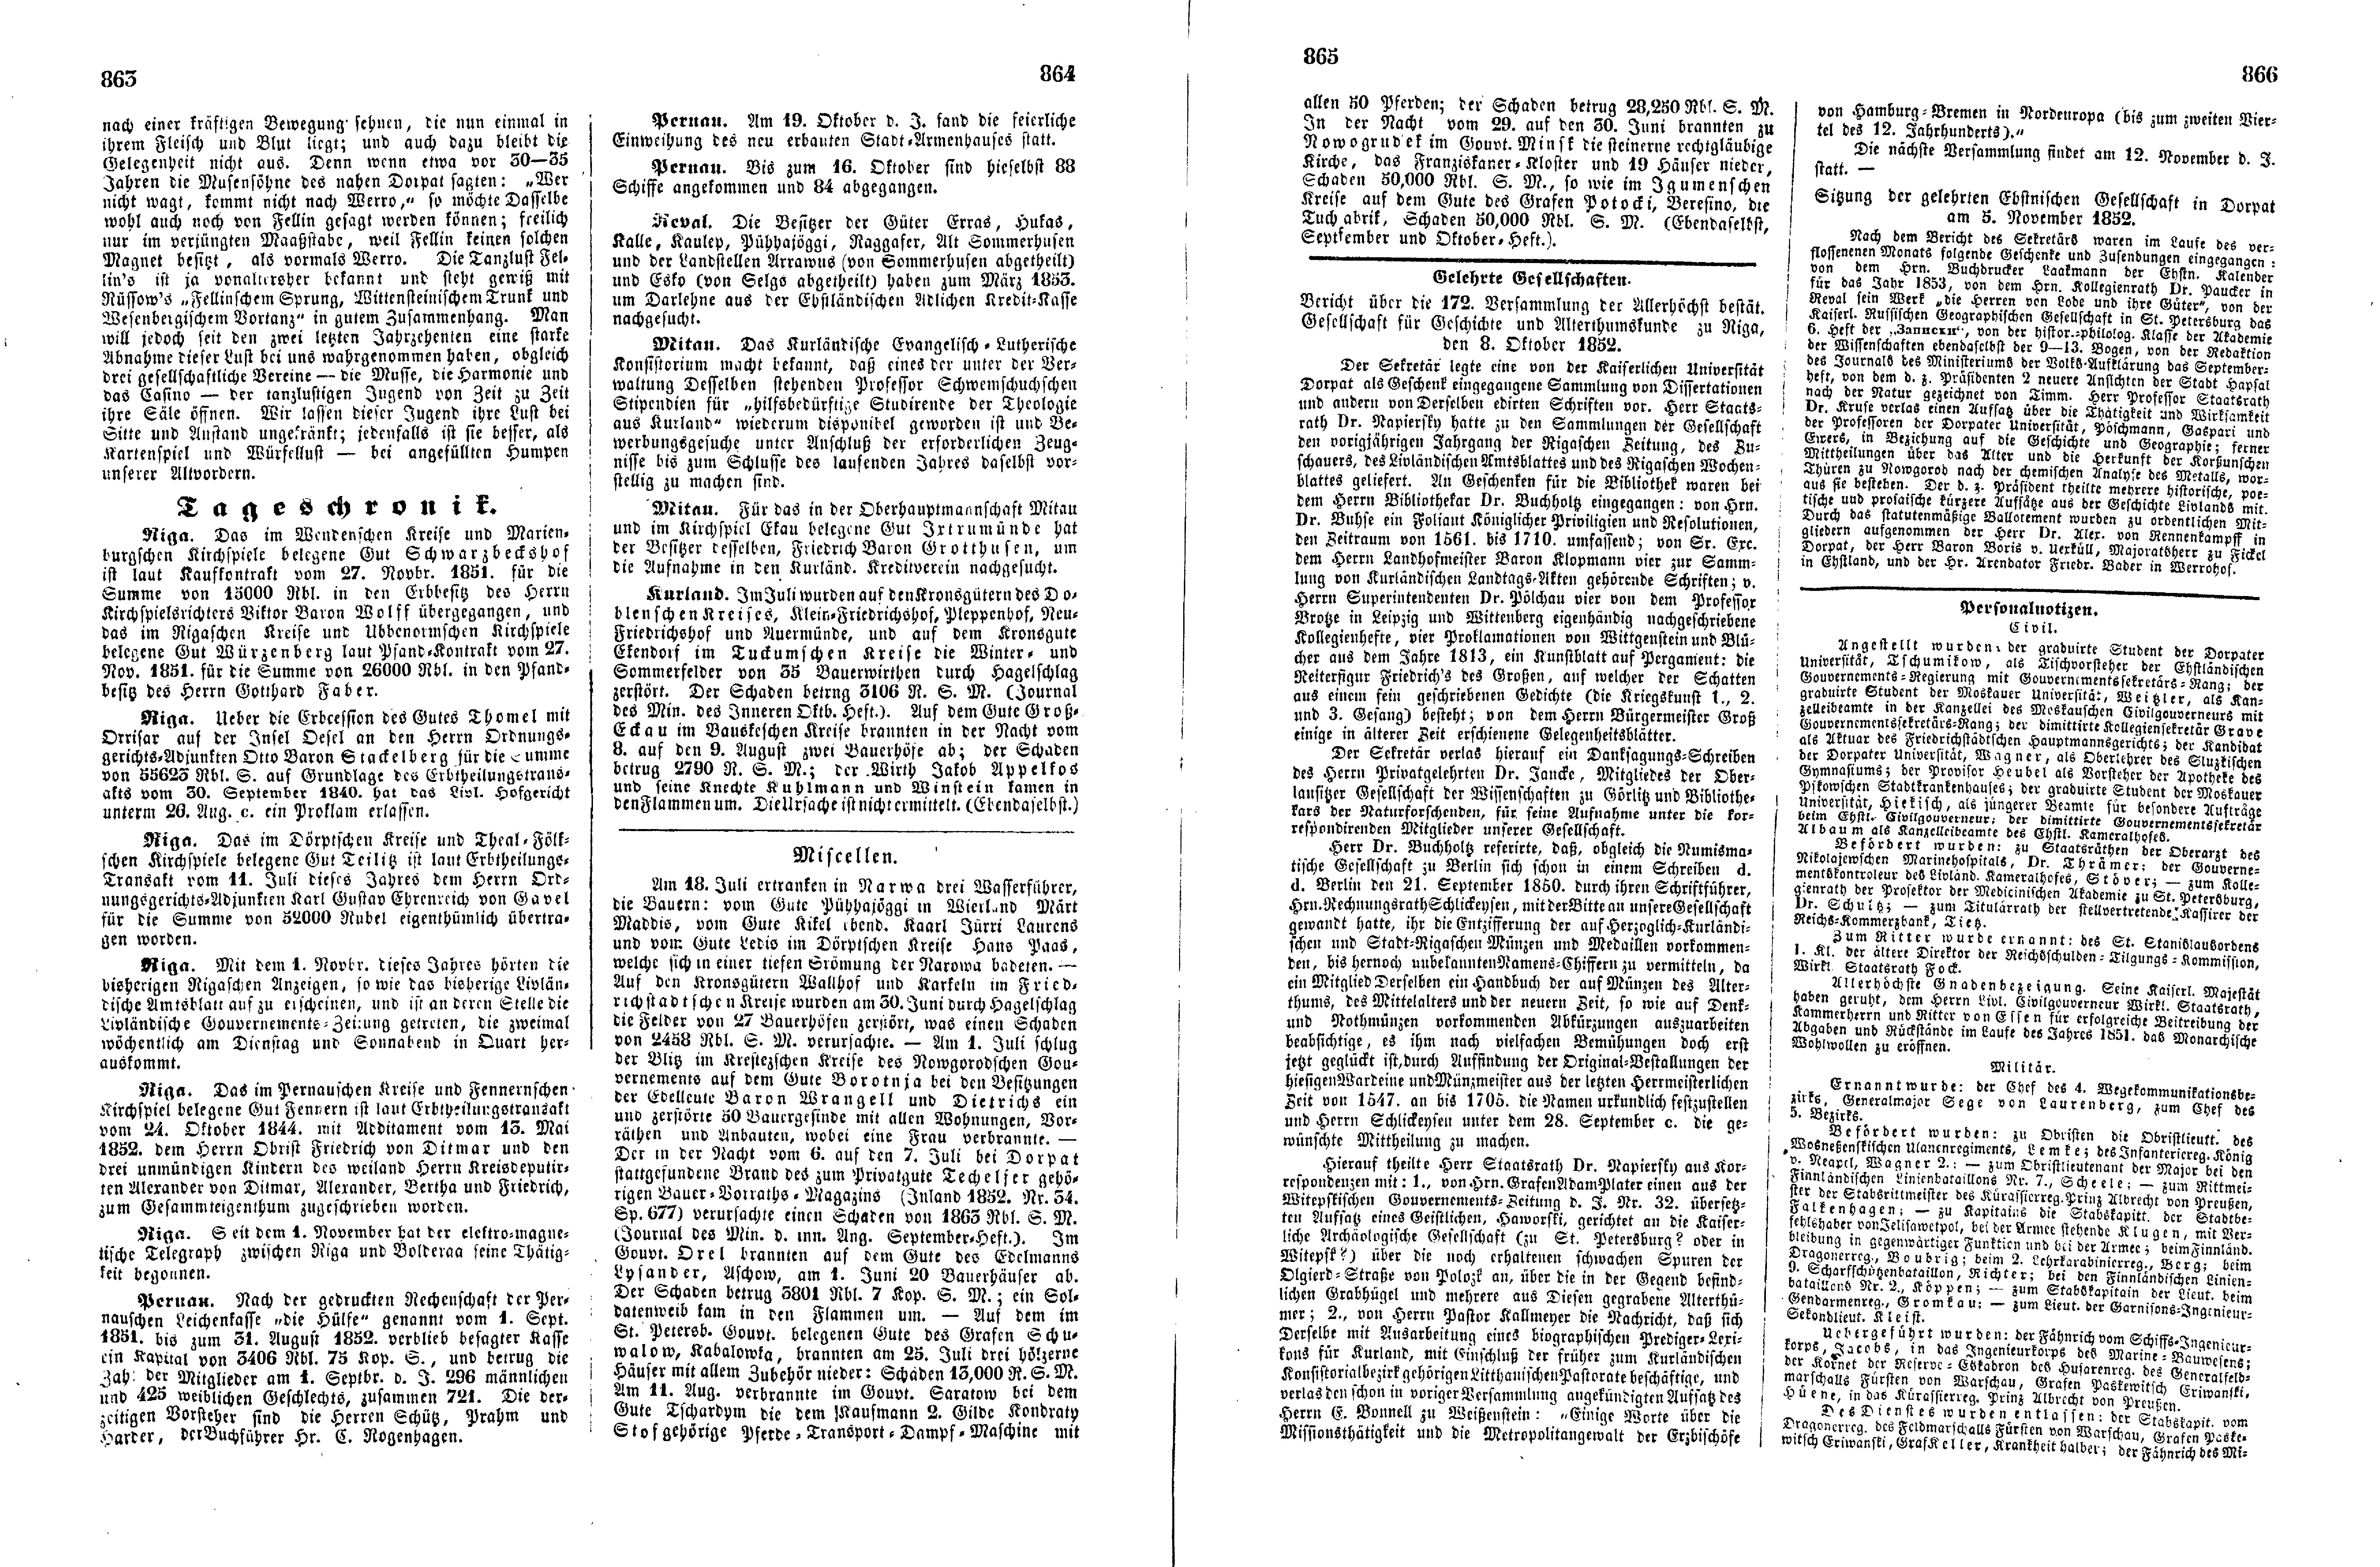 Das Inland [17] (1852) | 221. (863-866) Main body of text